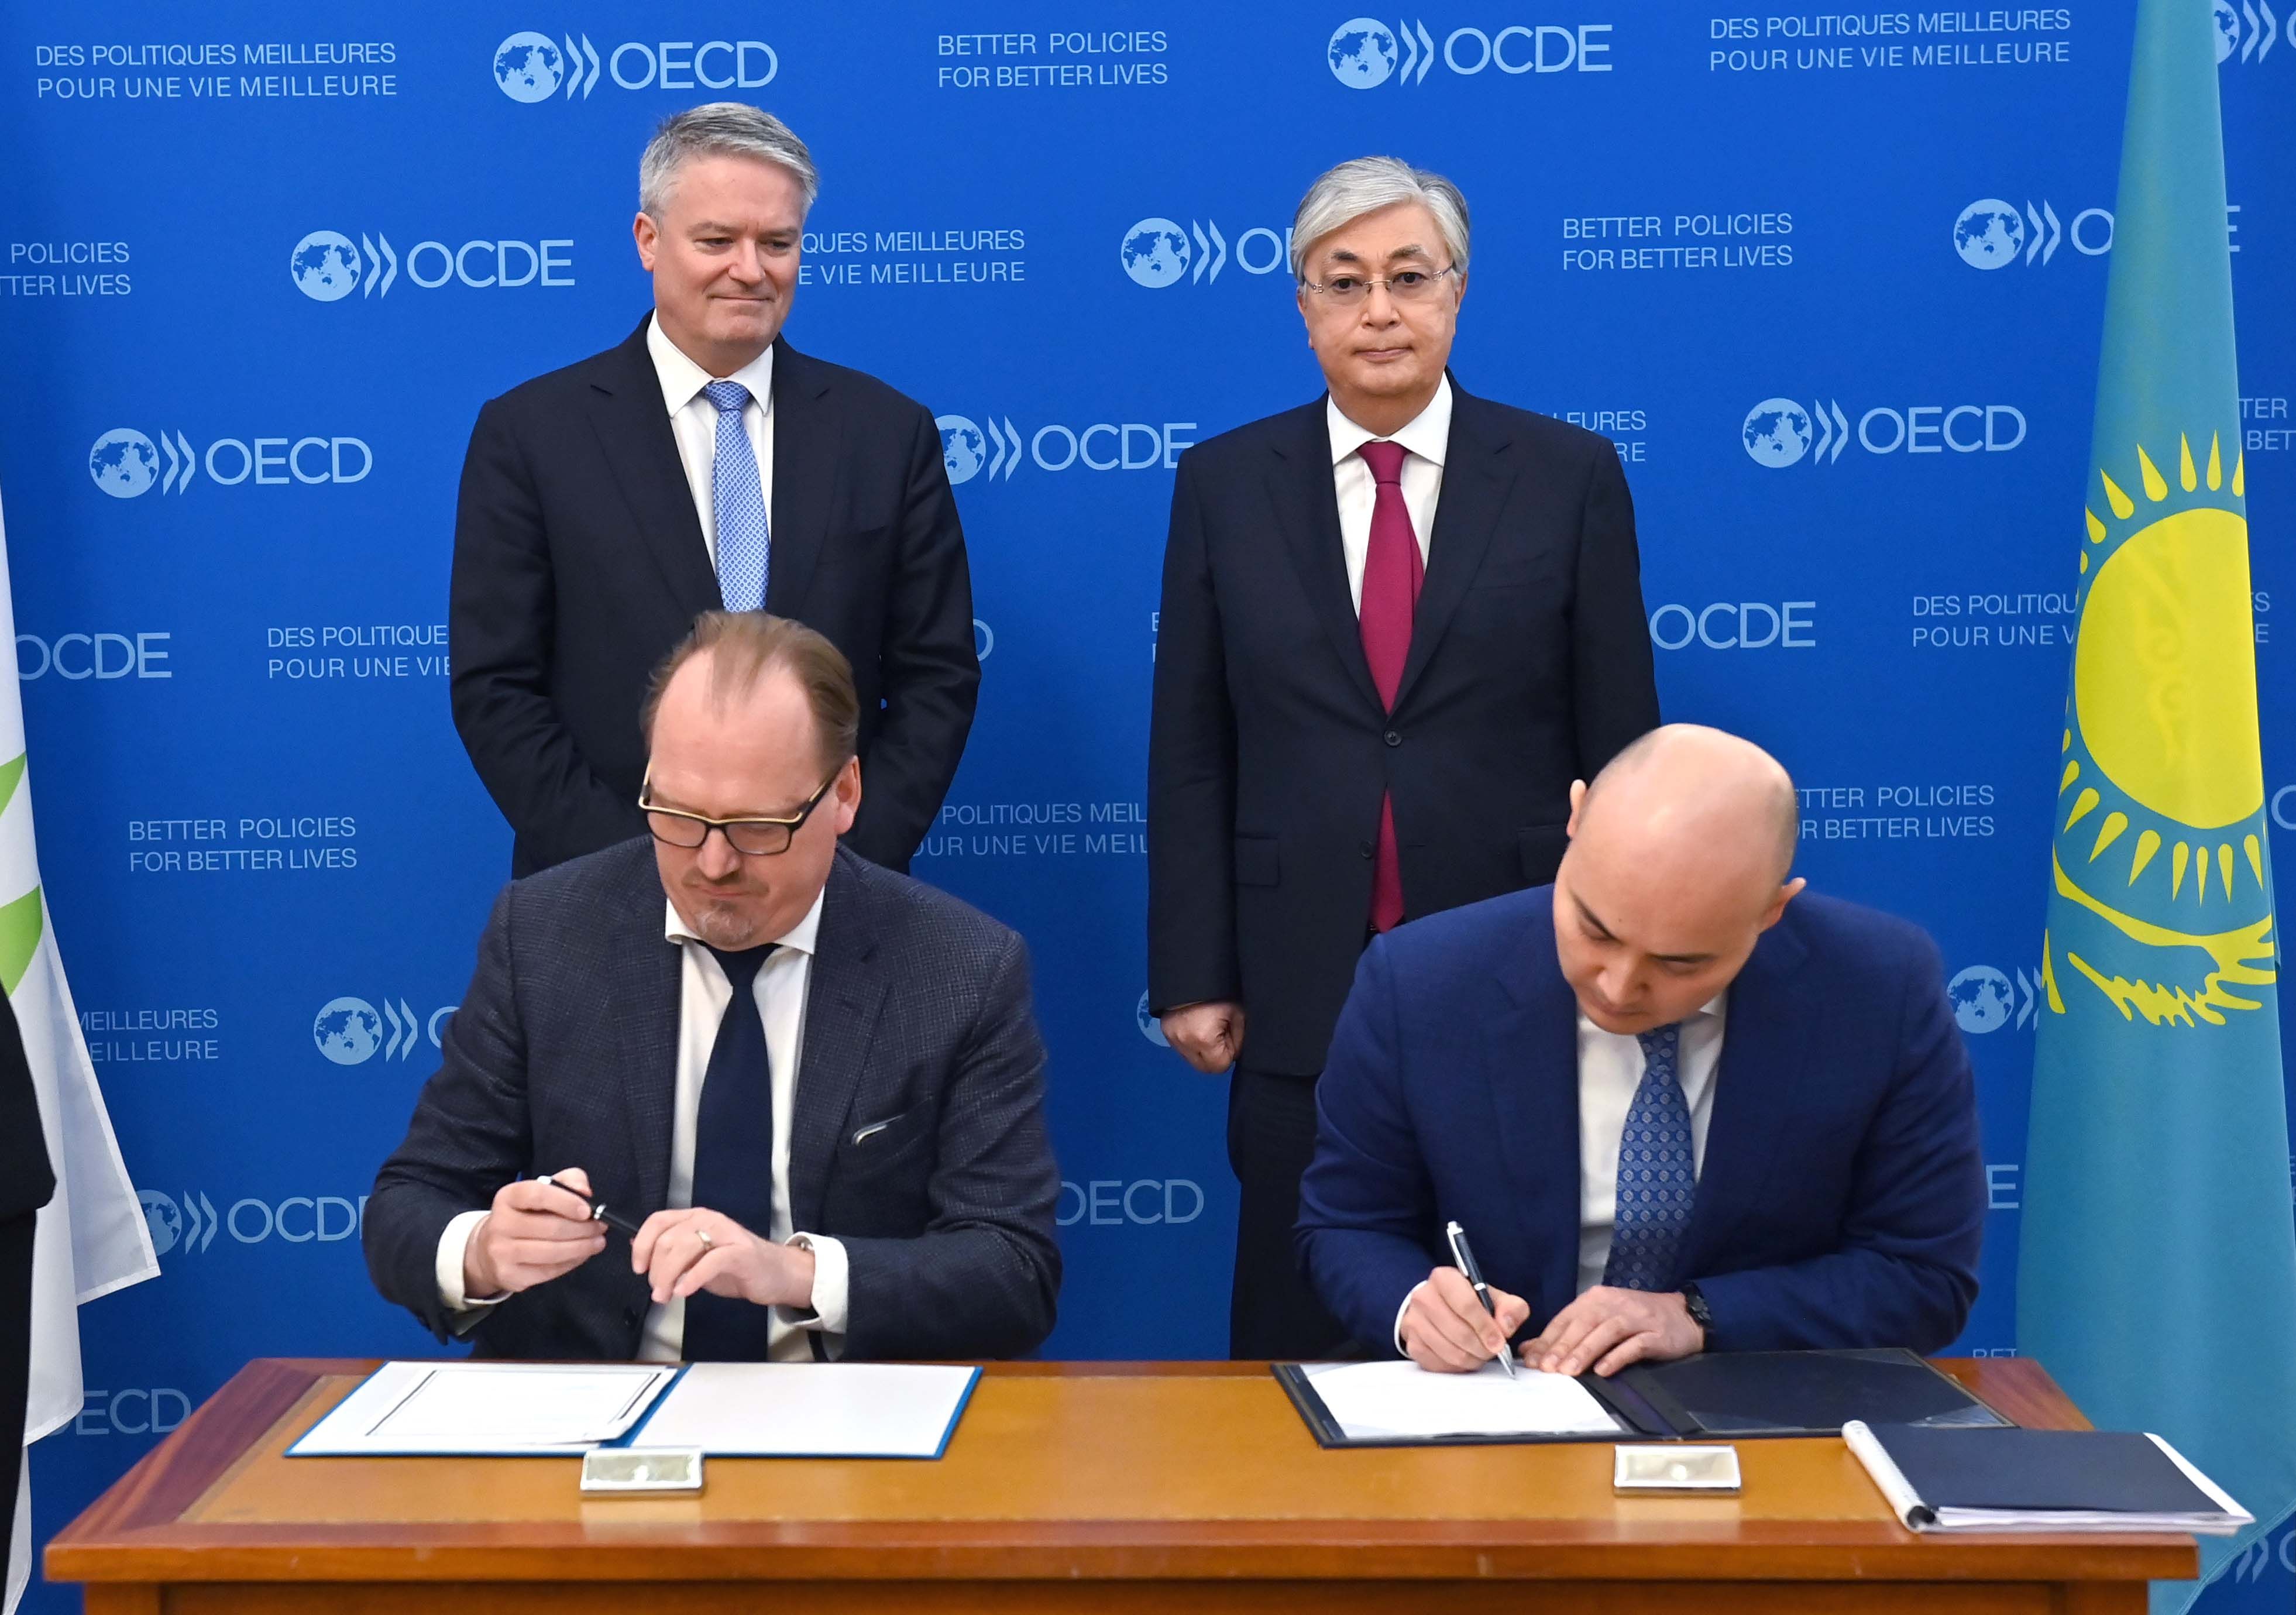 За время сотрудничества Казахстан и ОЭСР подписали 42 юридических документа 1722406 - Kapital.kz 